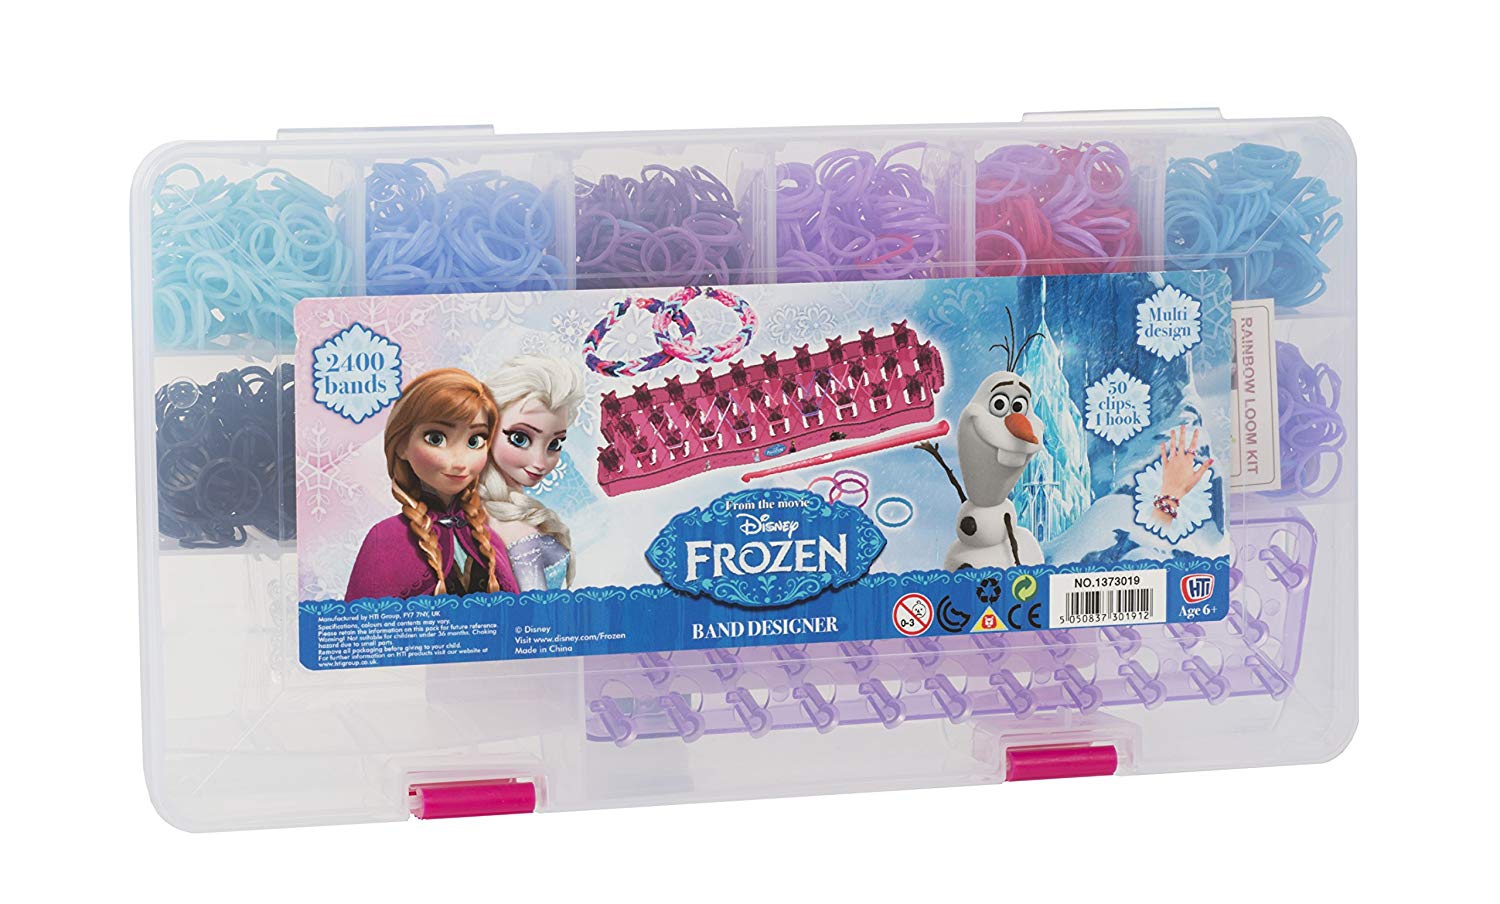 Disney Frozen Loom Band Case Kit 2400 Pcs Making Girls Accessories